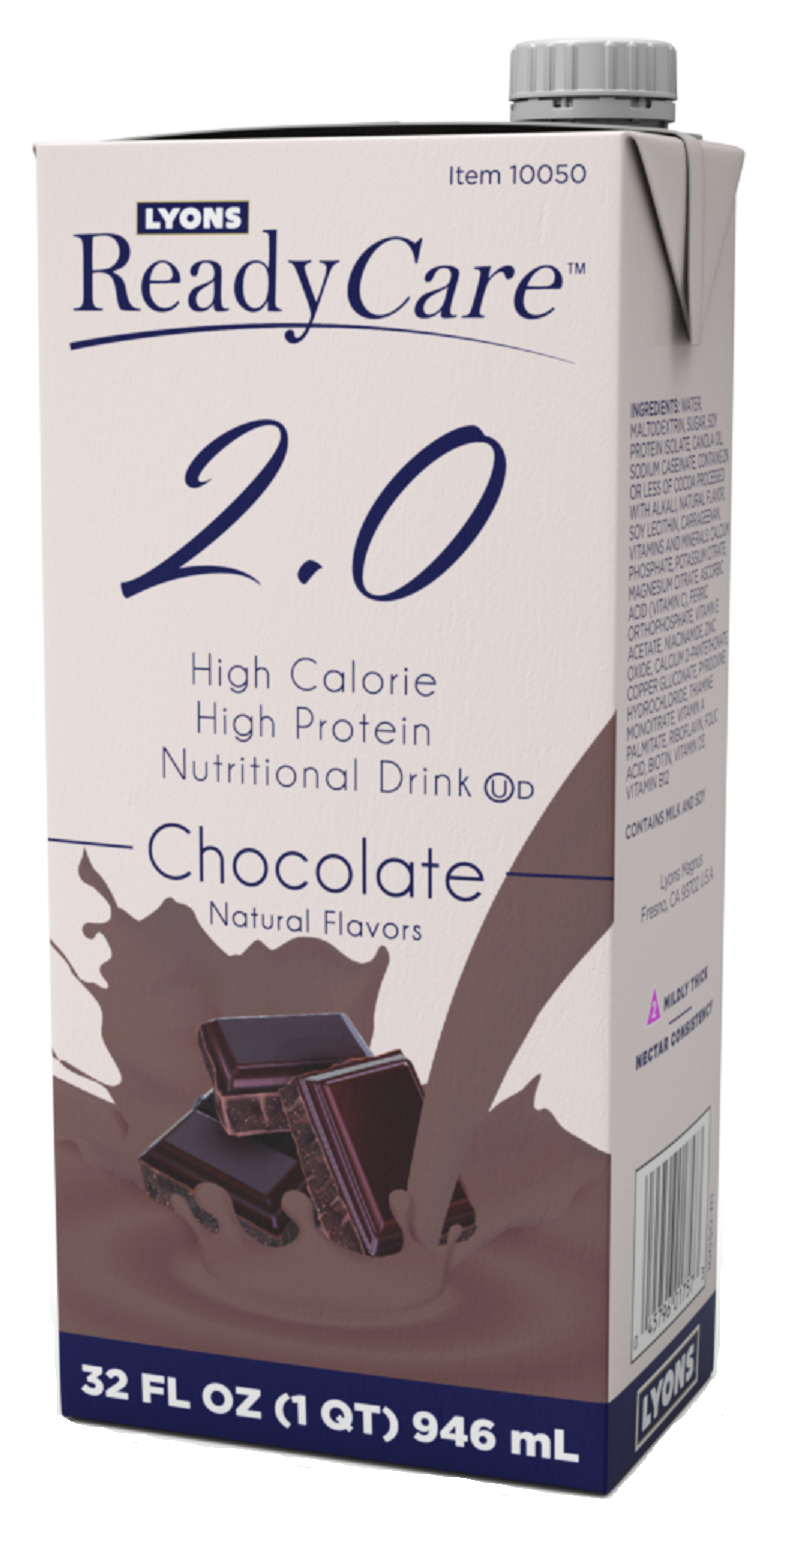 Chocolate 2.0 – ReadyCare@Home